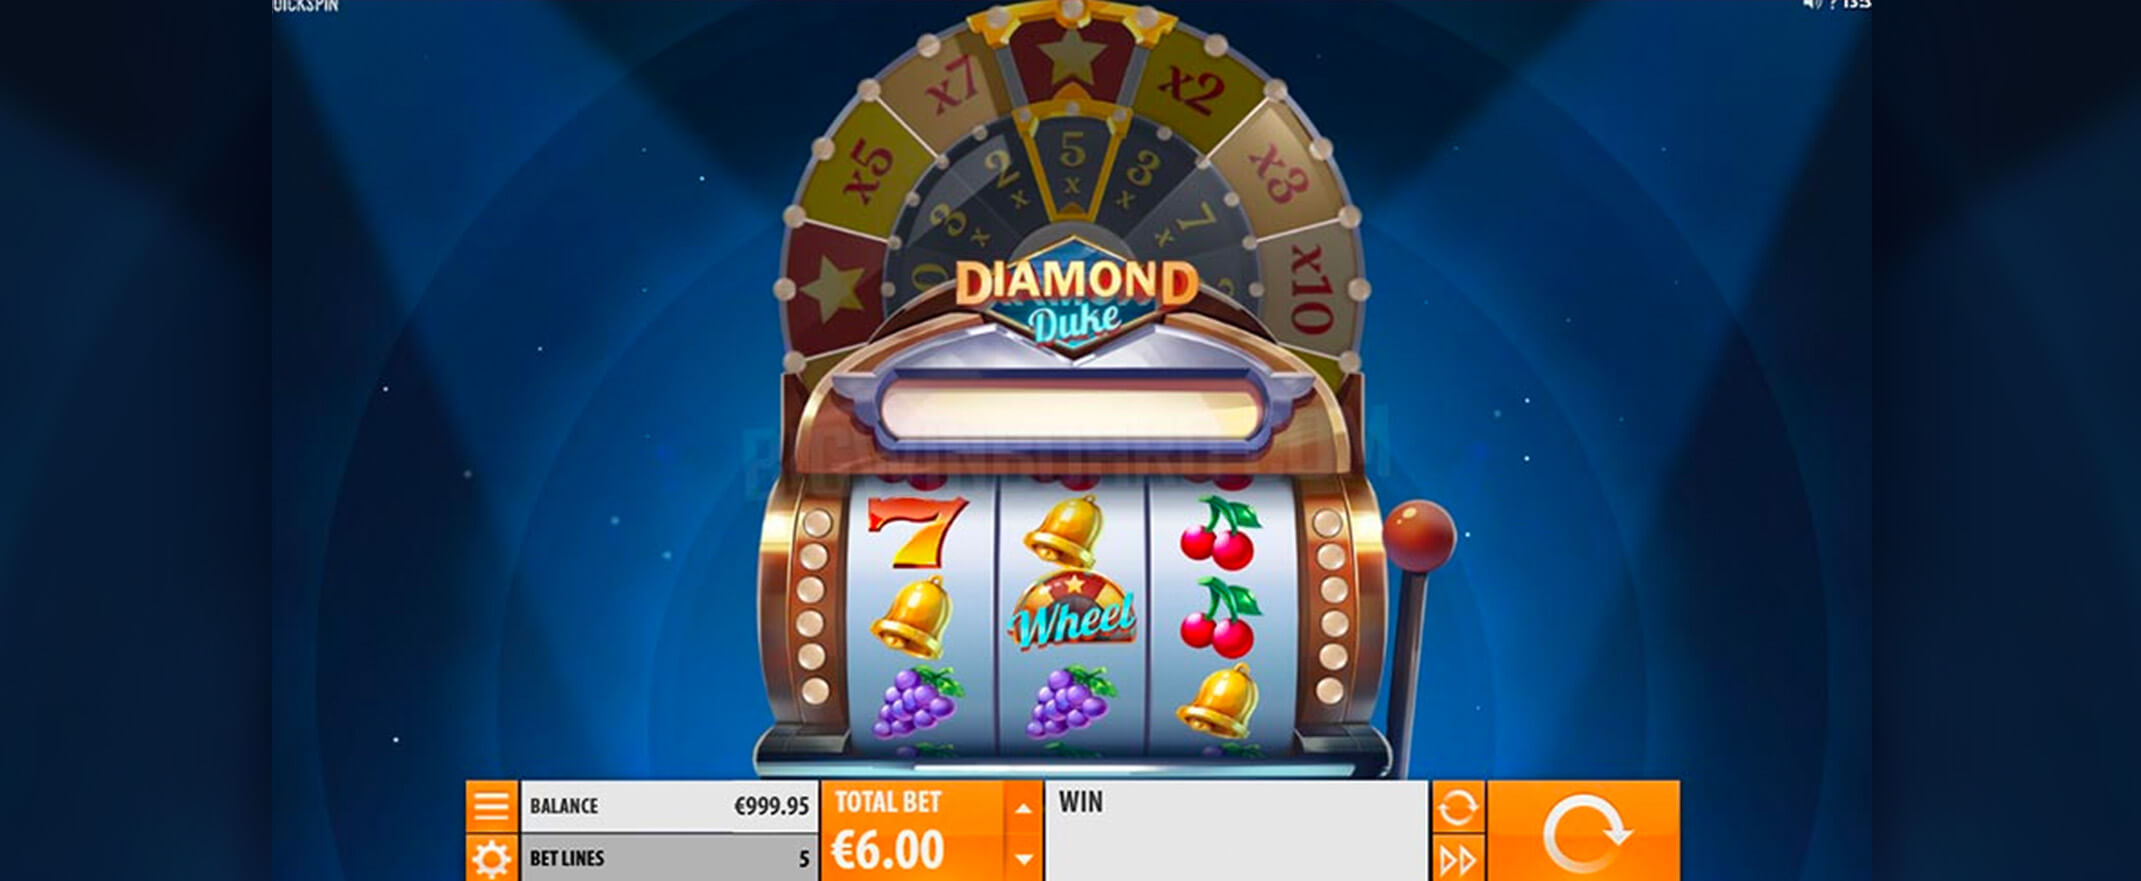 Diamond Duke Spielautomaten Bewertung